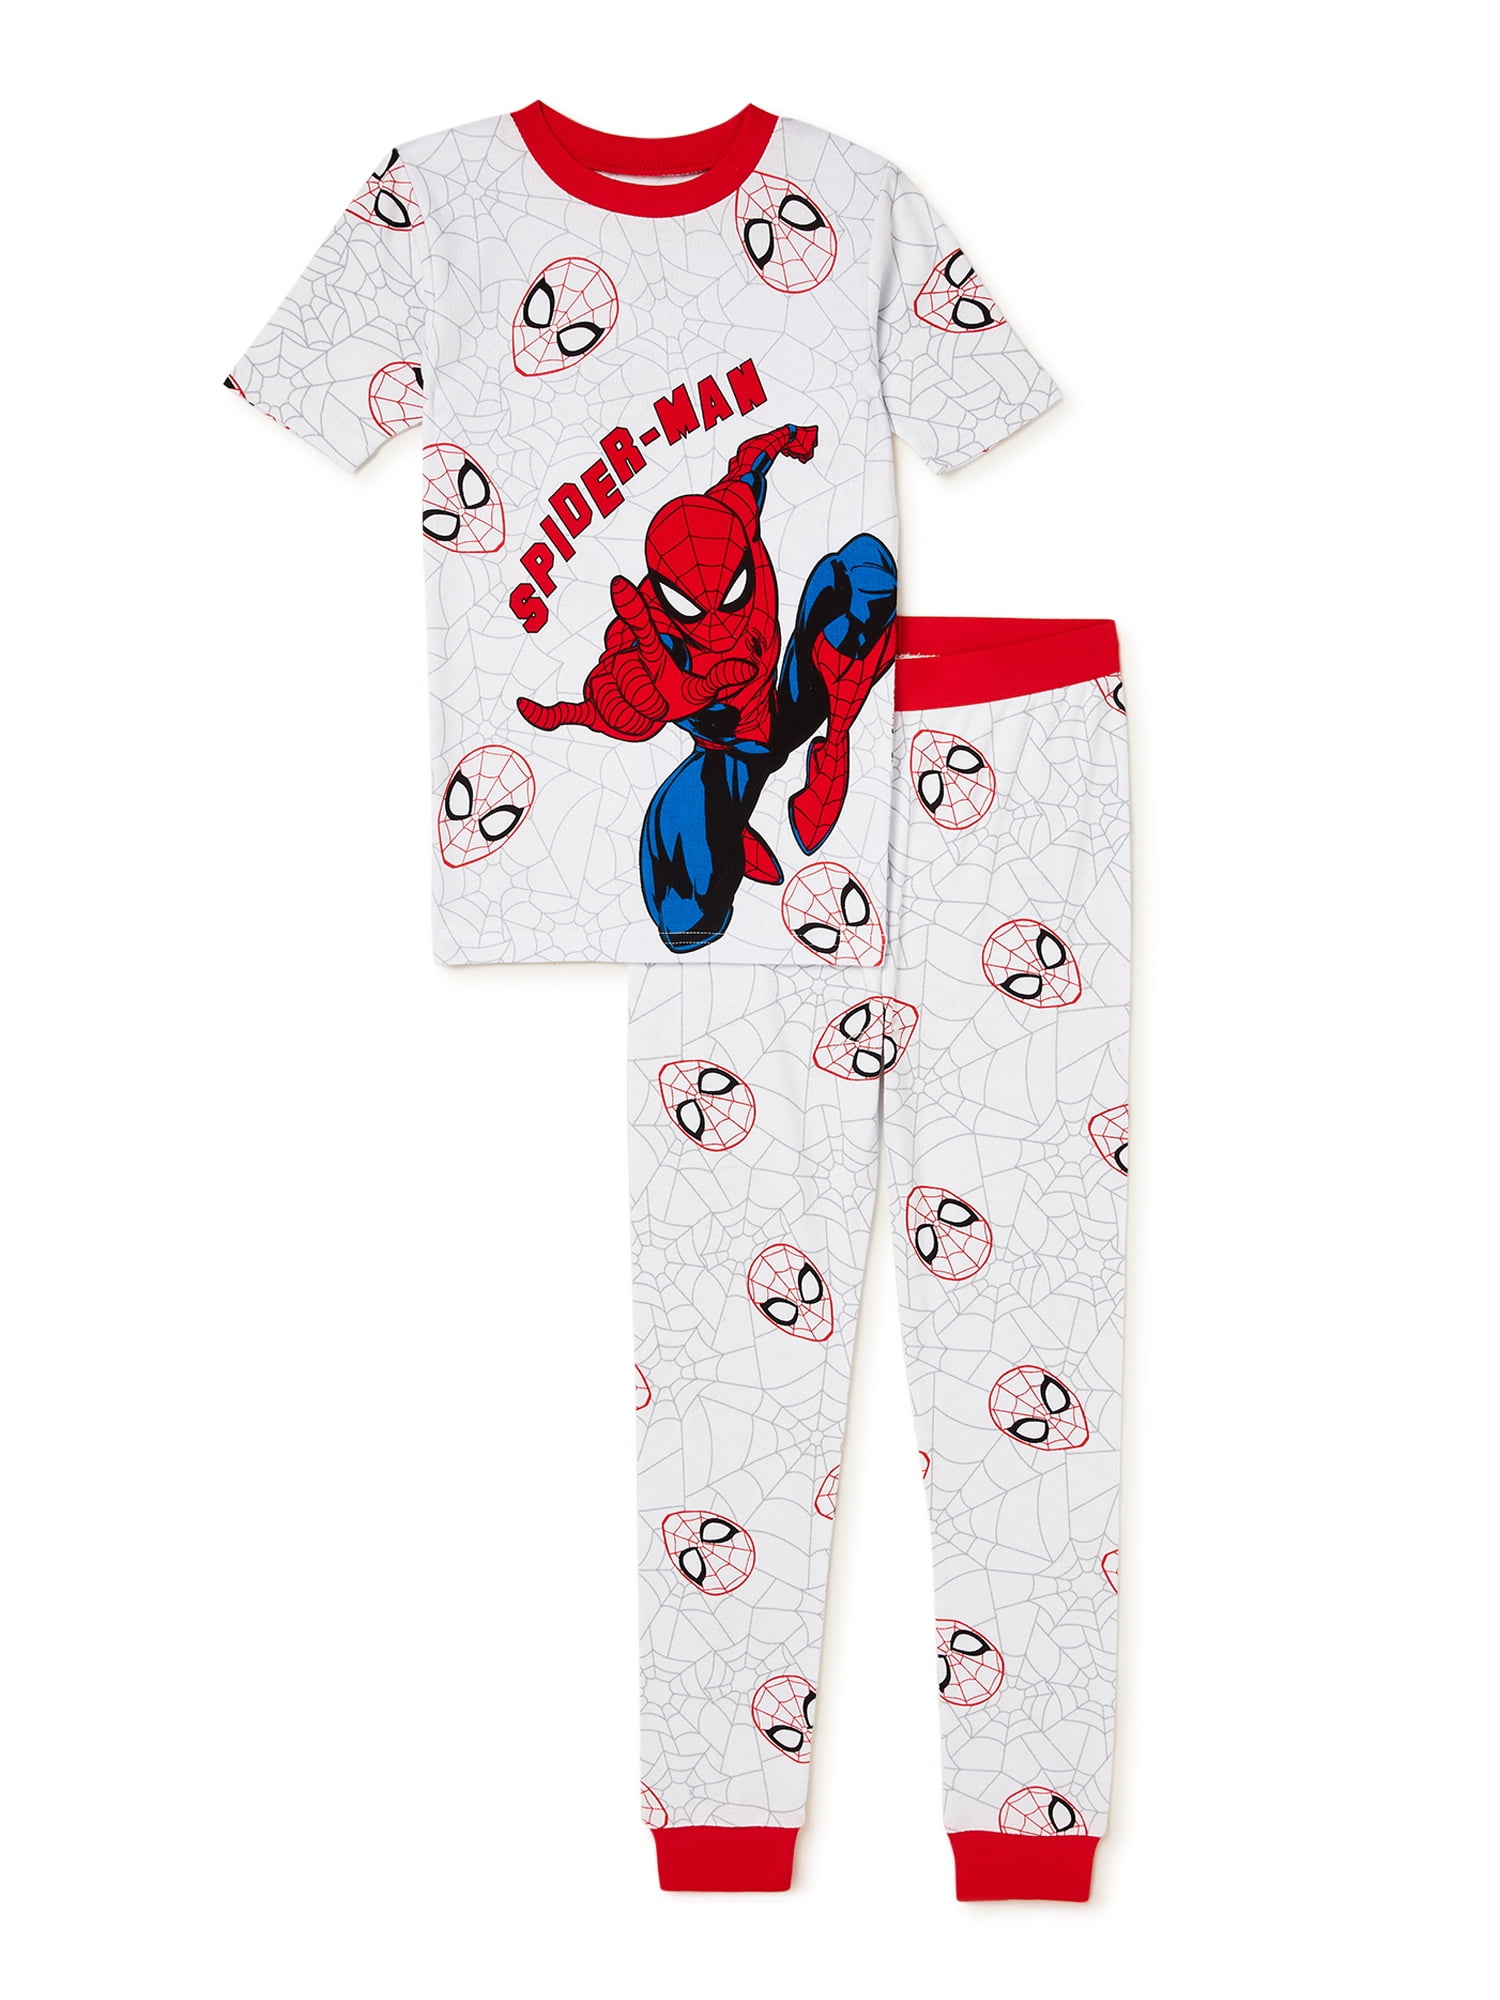 Boys SPIDERMAN Short Sleeve Pyjamas T-shirt & Shorts,Age 4-10 OFFICIAL,New 